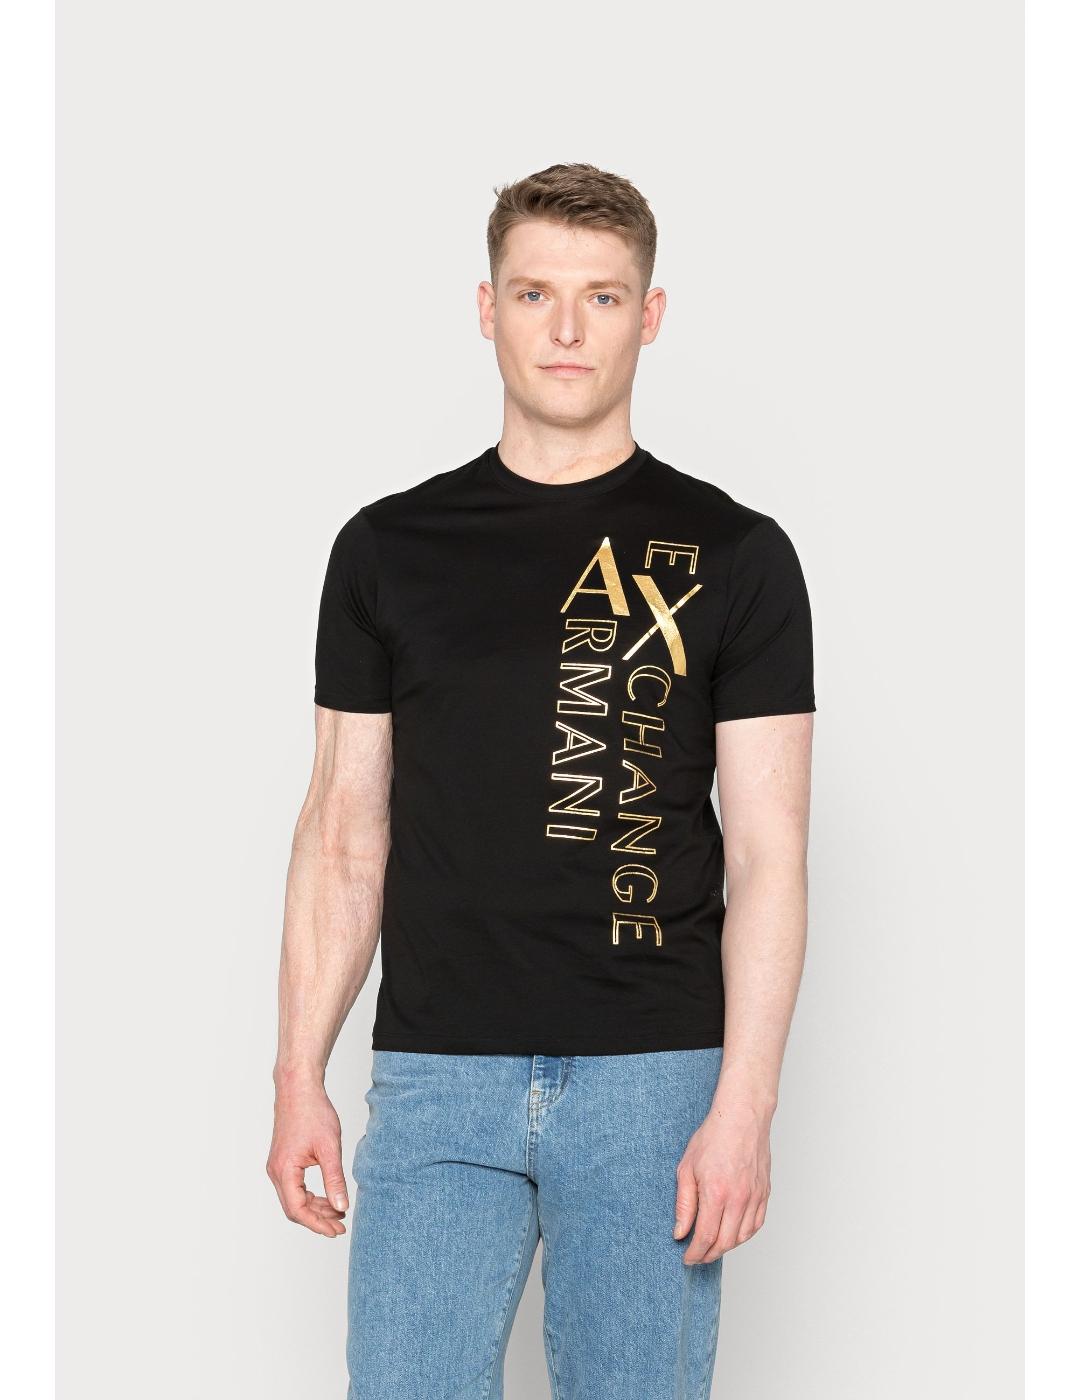 Camiseta Armani Exchange logo dorado hombre